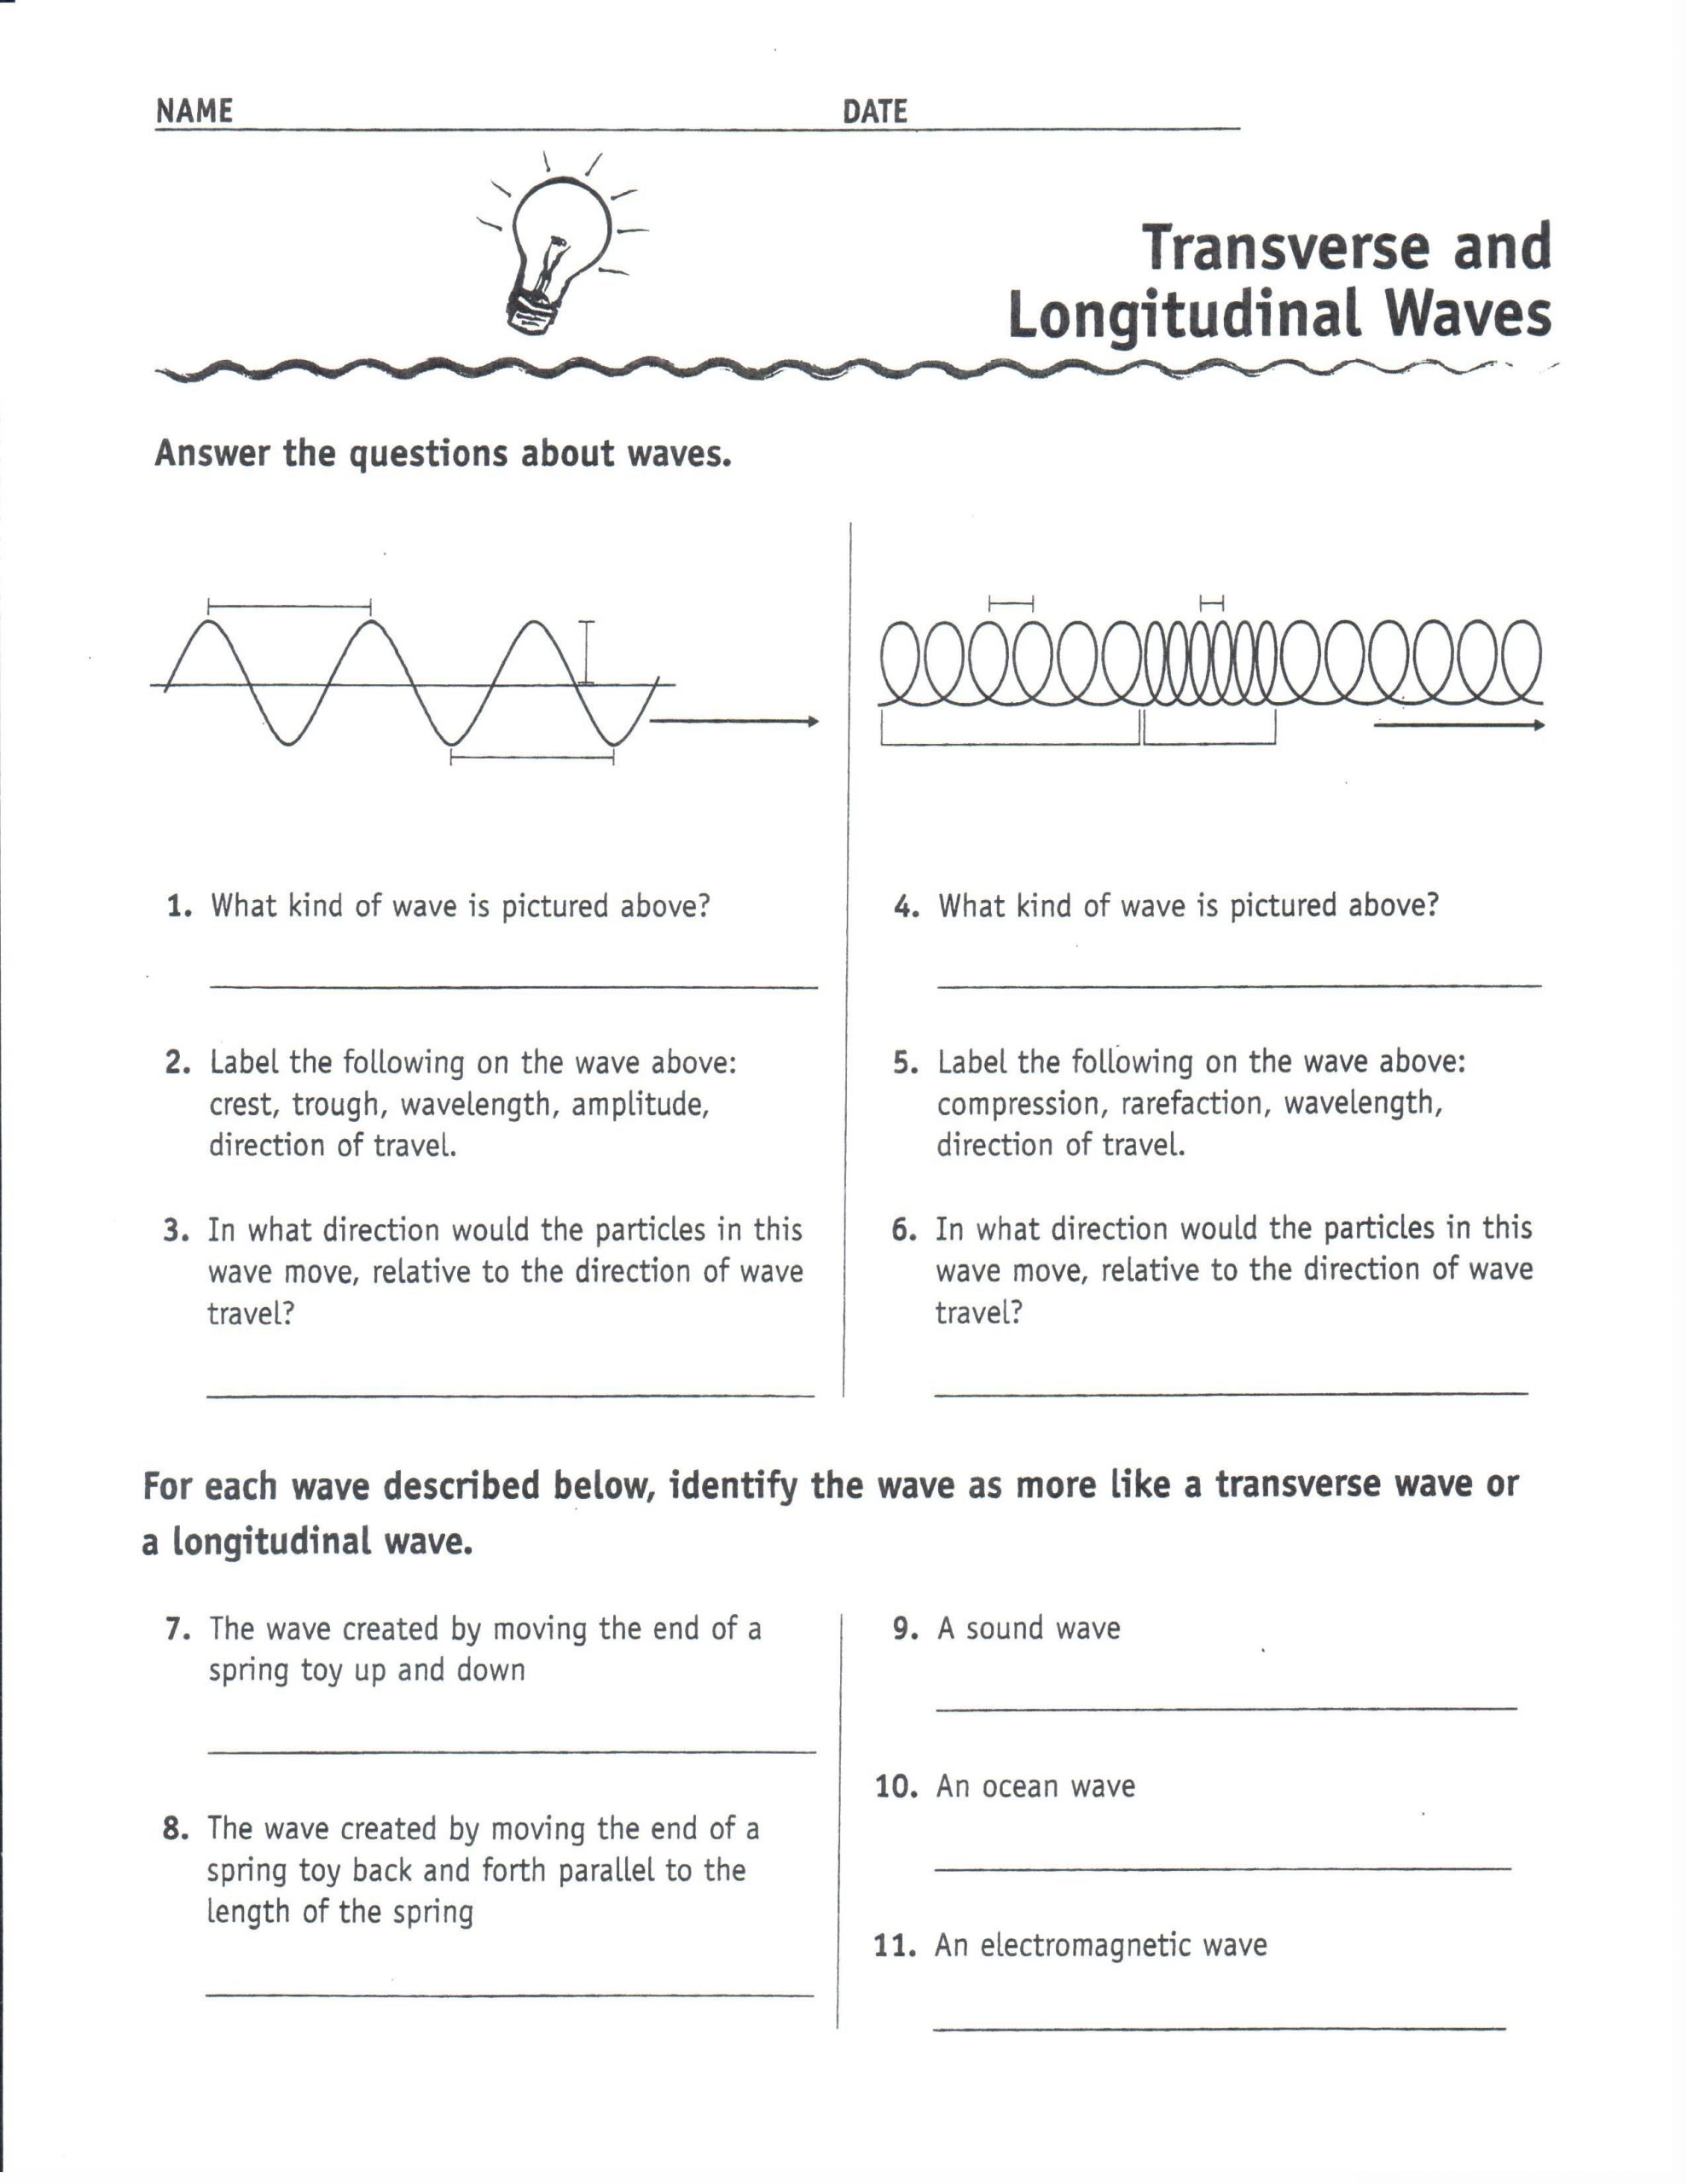 Worksheet Labeling Waves Answer Key Physical Science Transverse and Longitudinal Waves 1uyxl0i